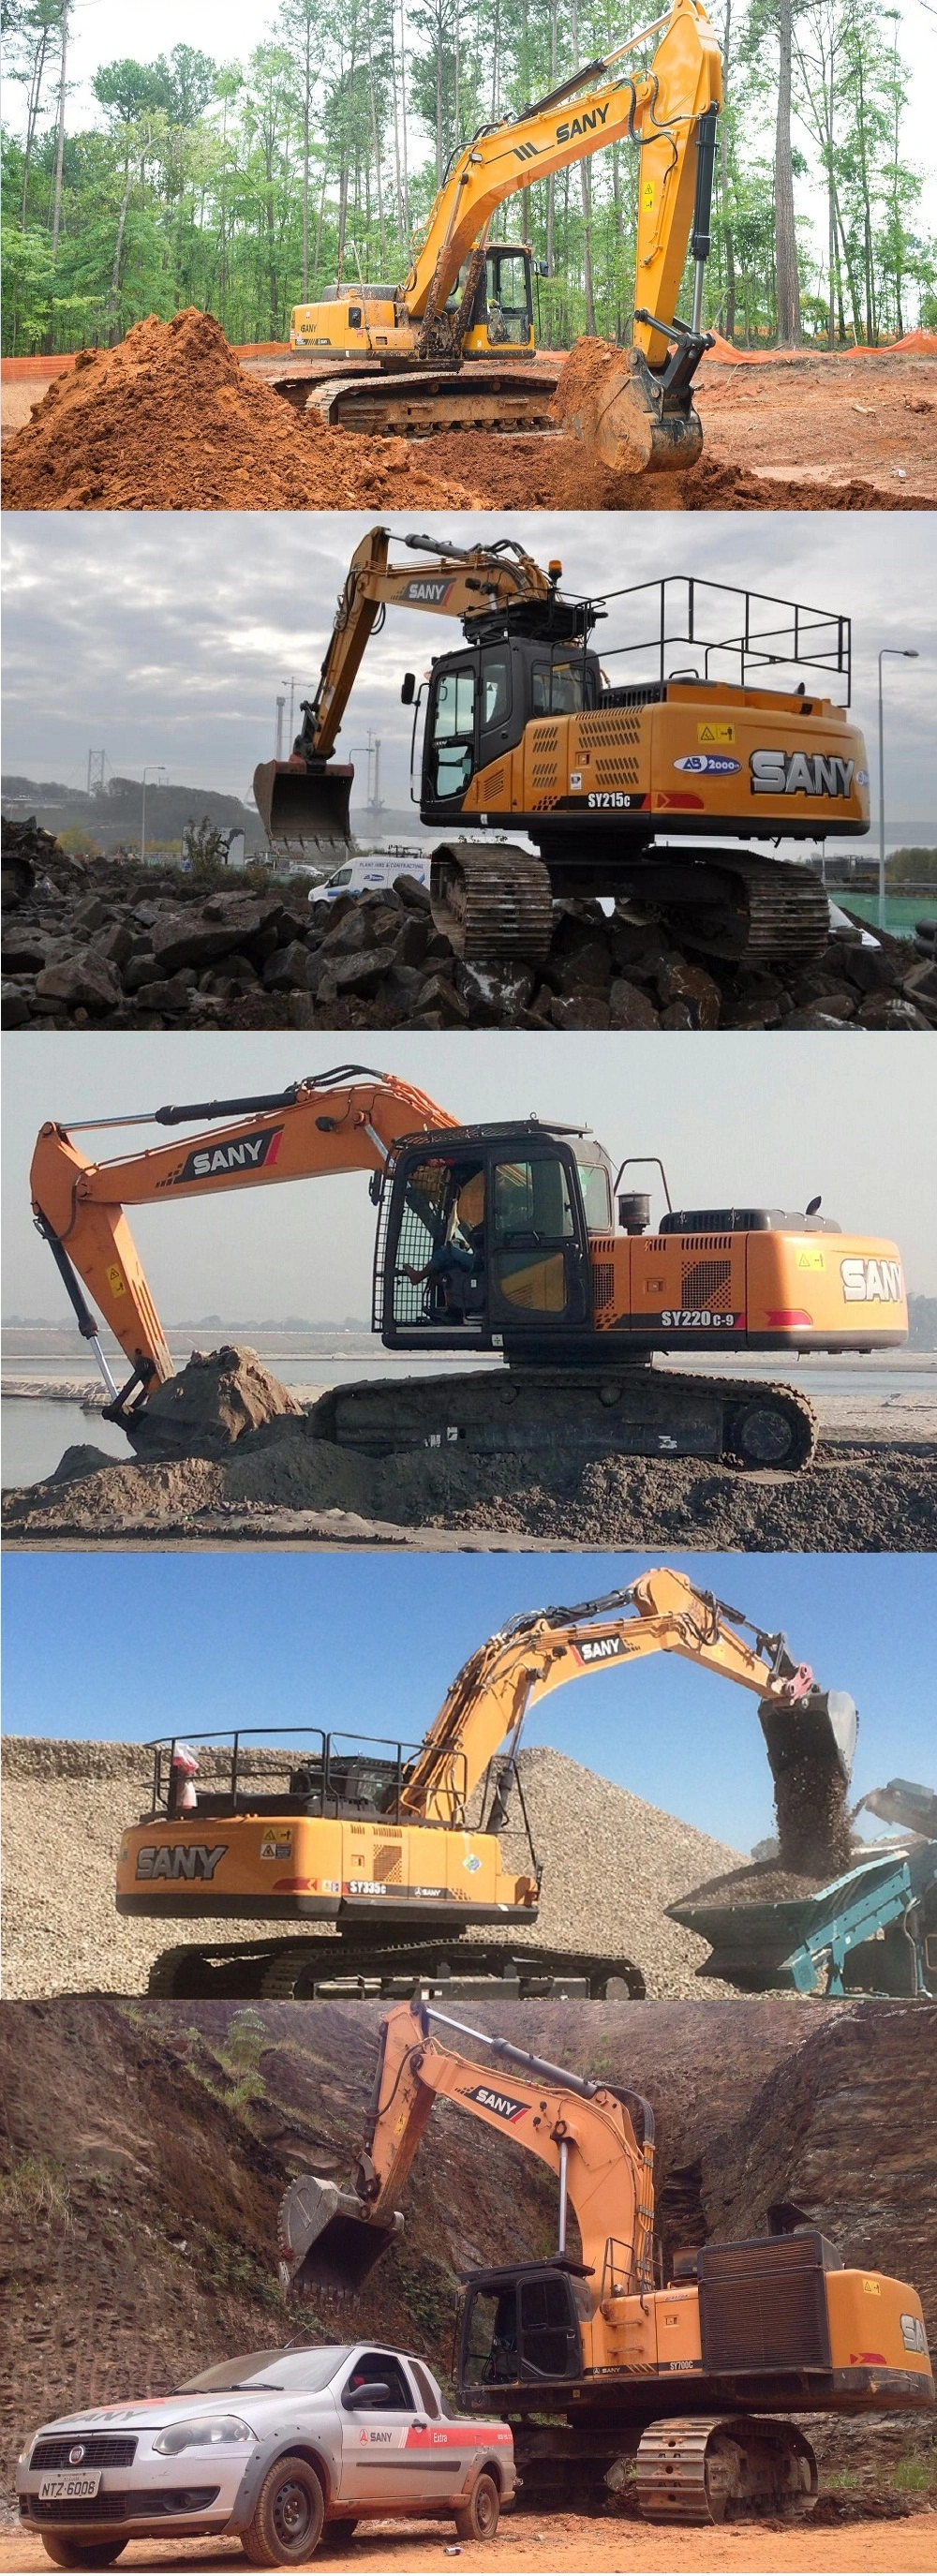 Sany Sy500h 50.5 Ton Mining Construction Large Crawler Hydraulic Excavator